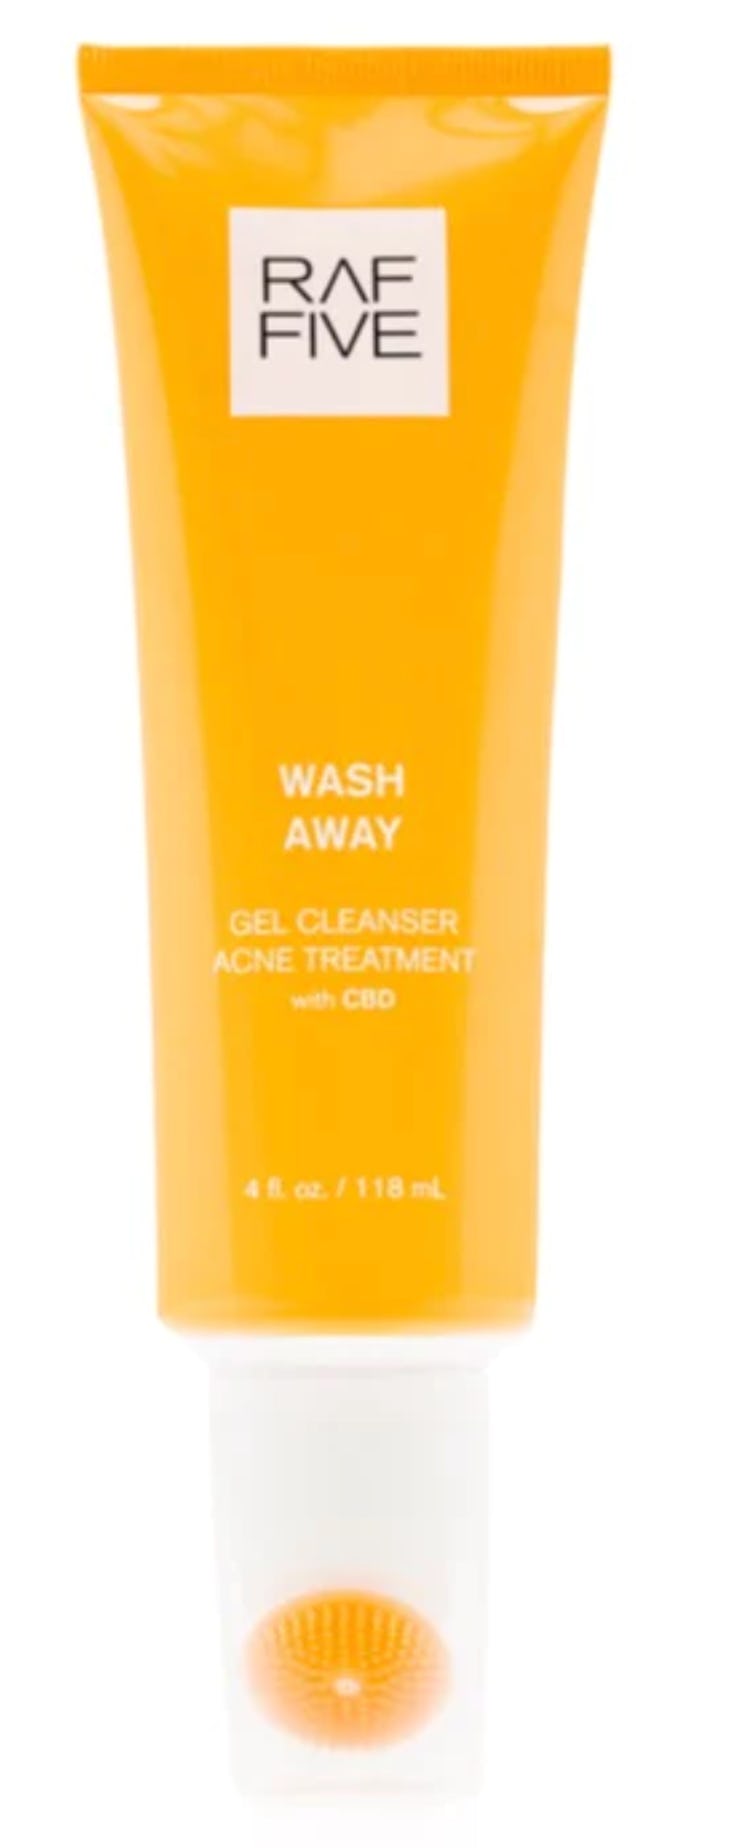 RAF FIVE Wash Away Gel Cleanser Acne Treatment